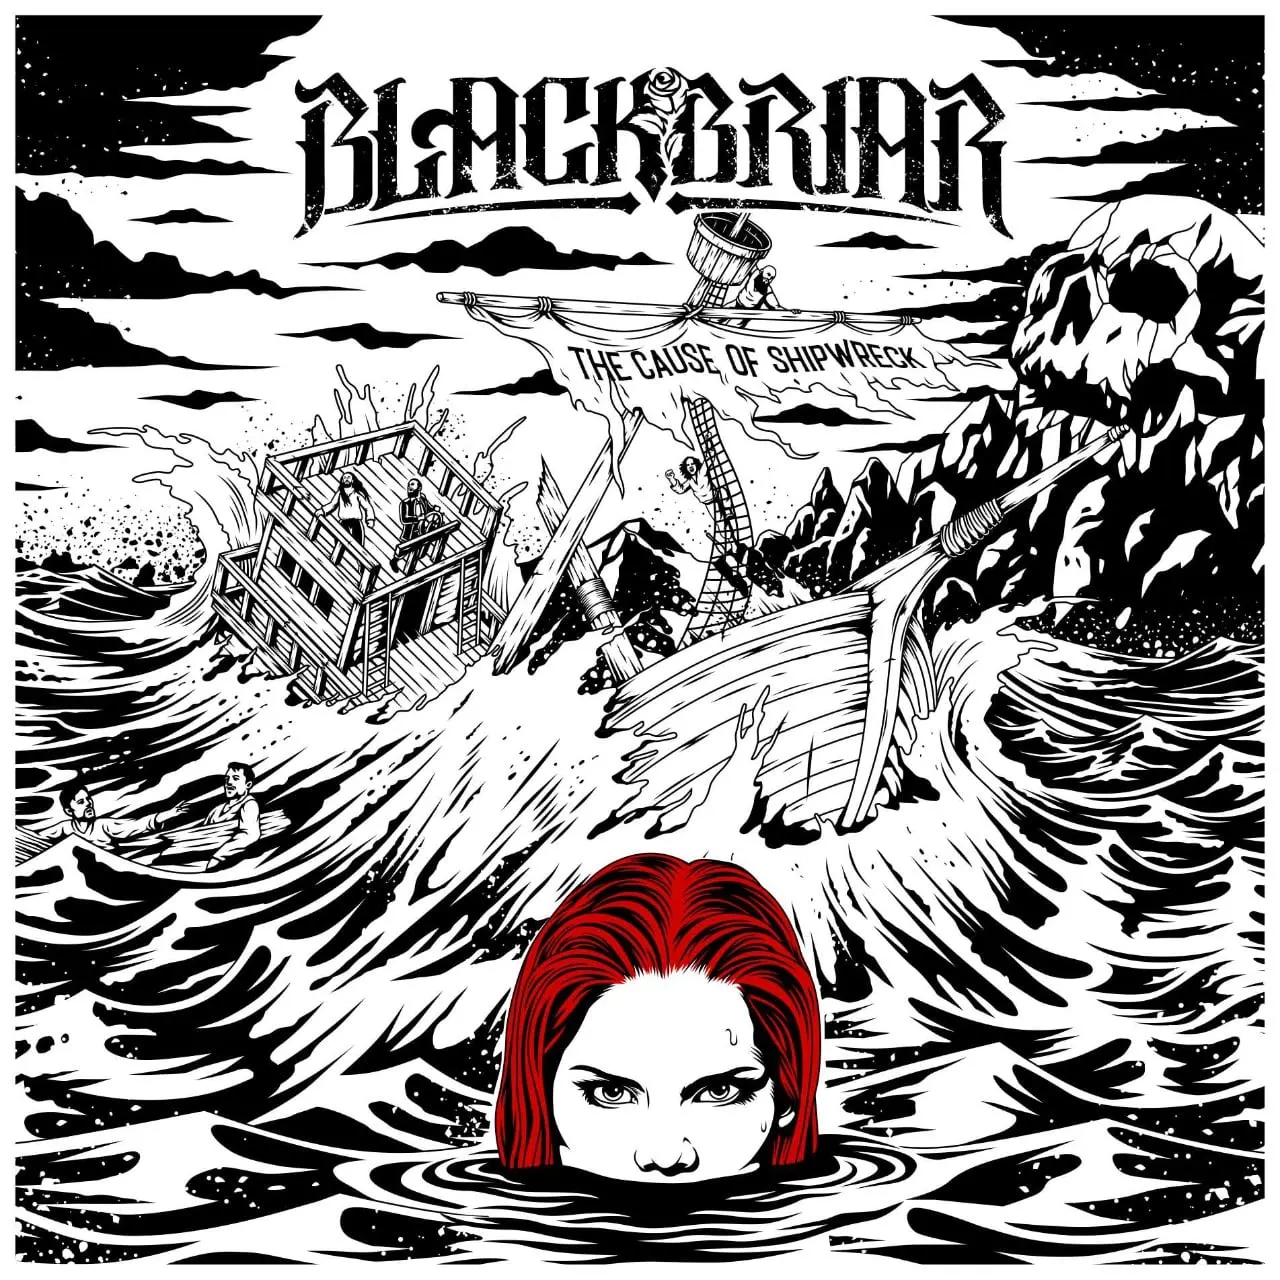 Blackbriar The Cause of Shipwreck cover artwork